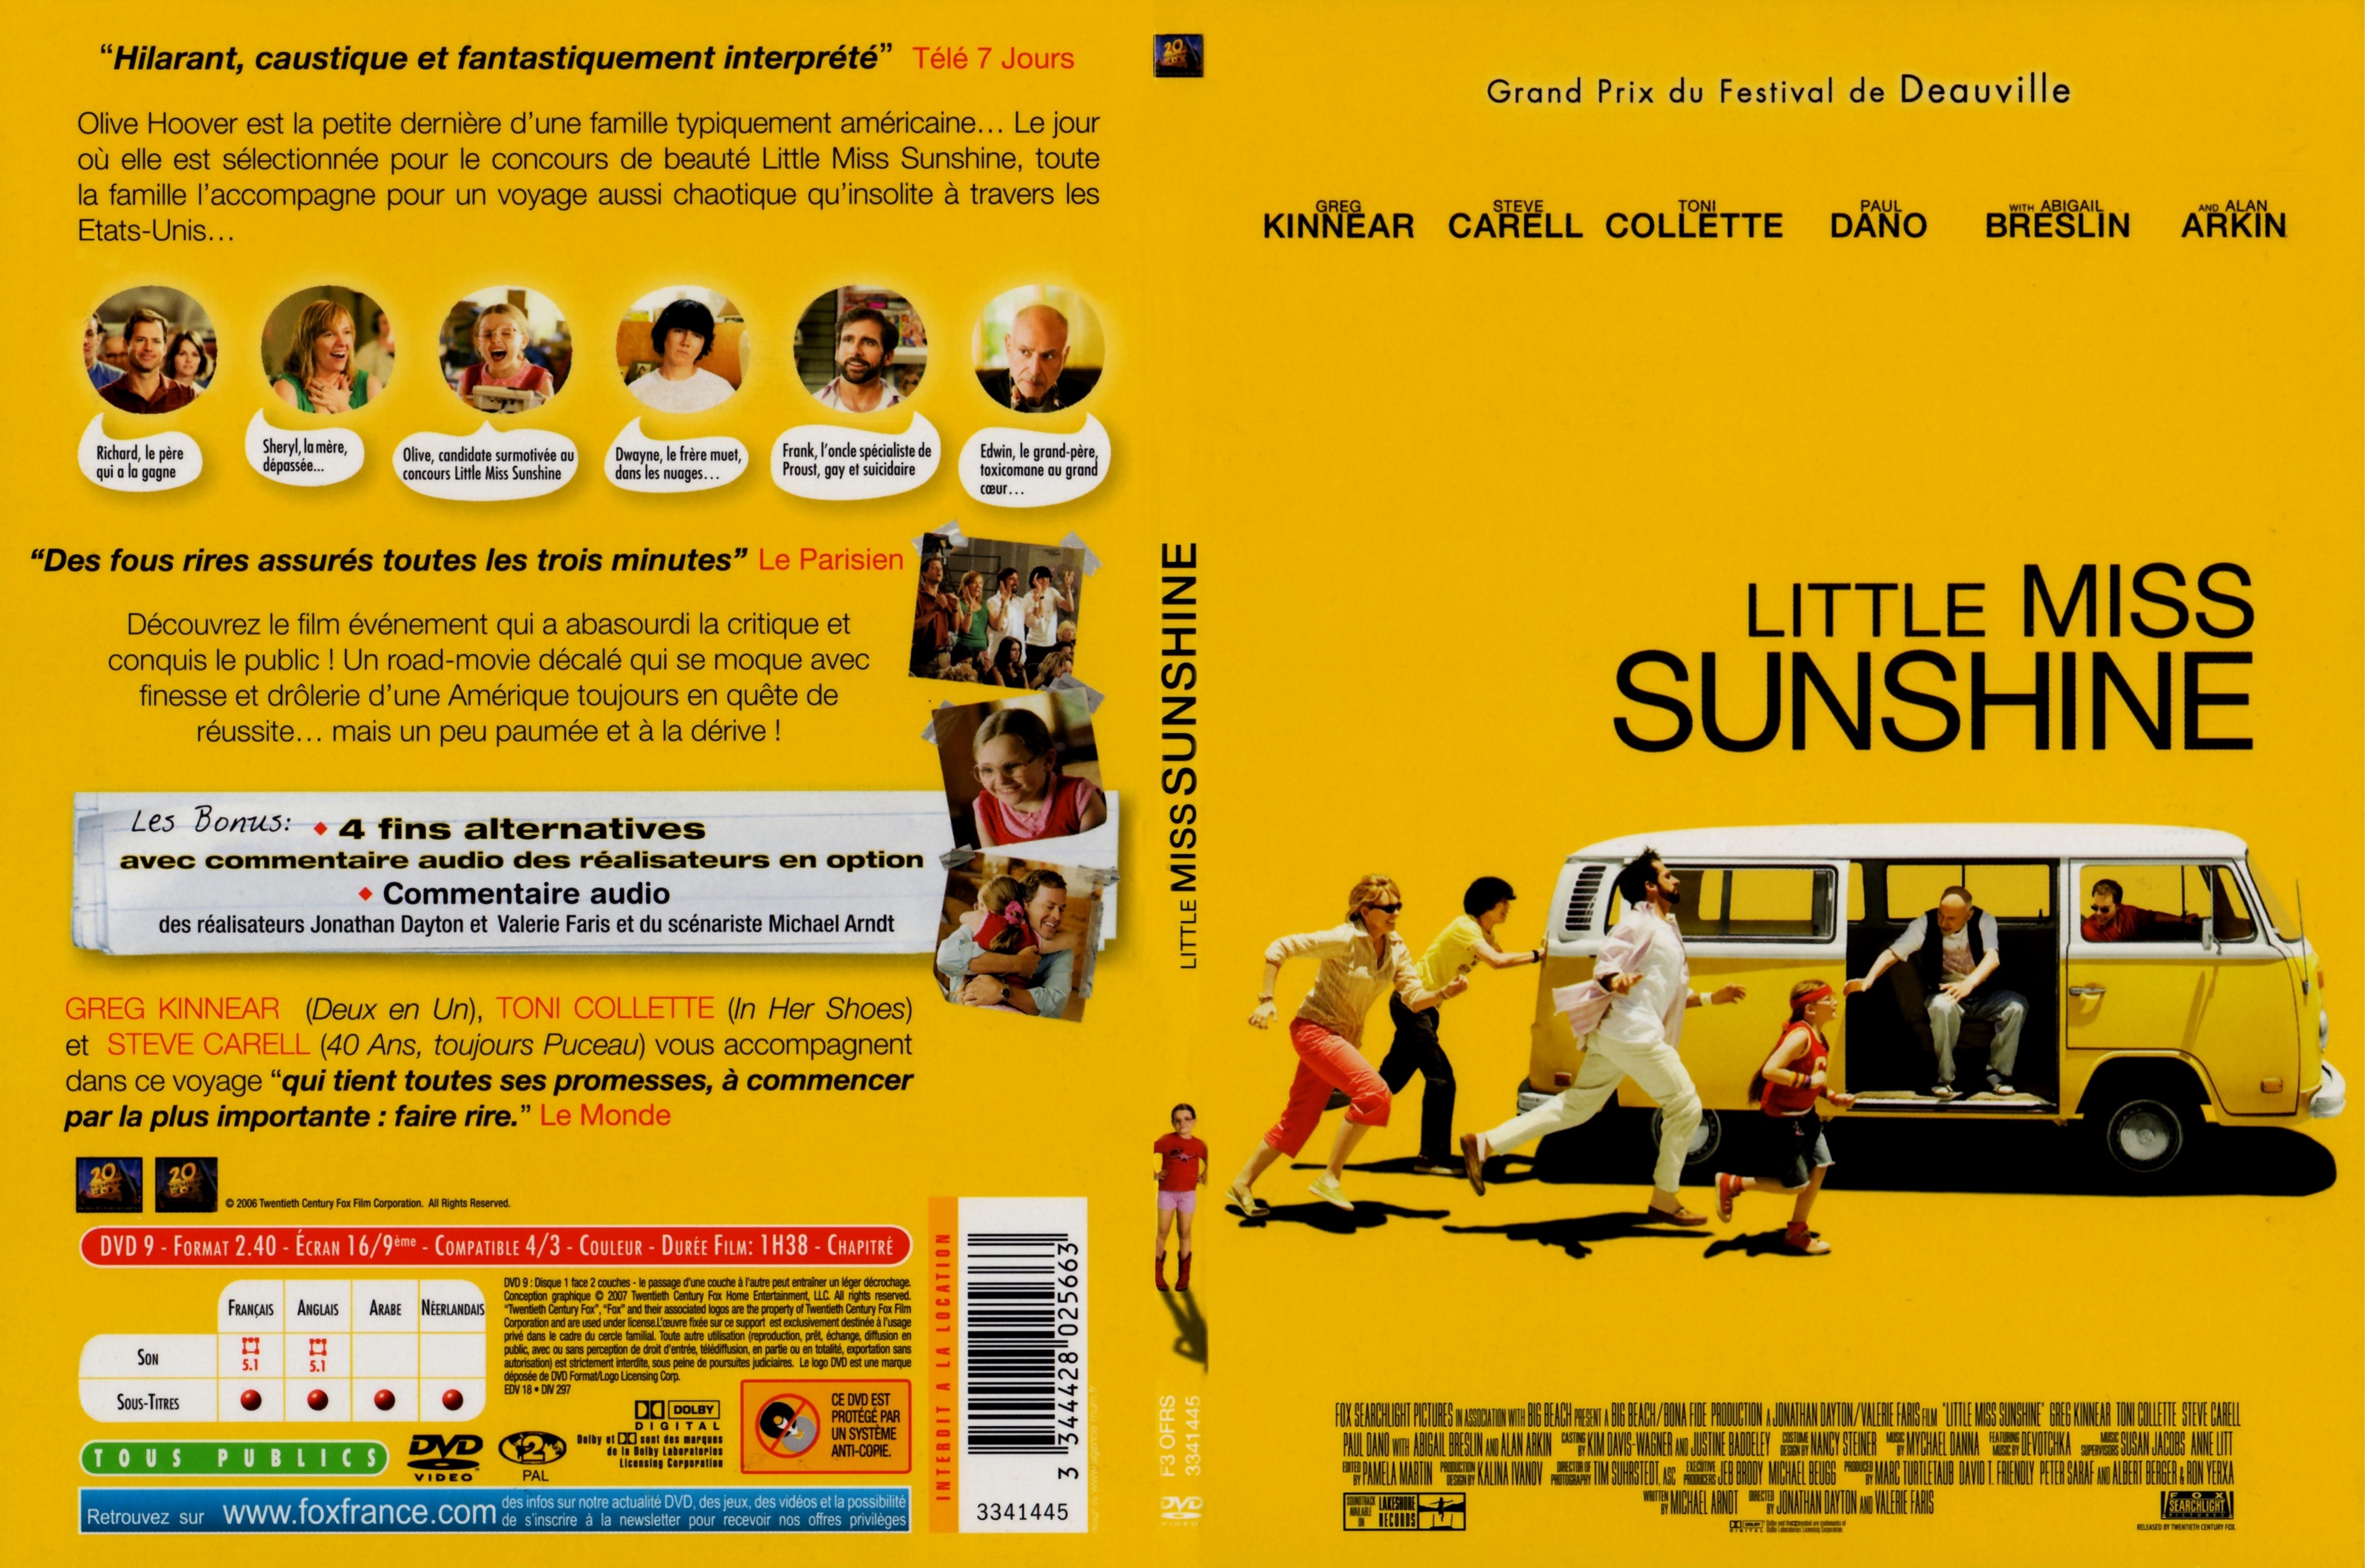 Jaquette DVD Little miss sunshine